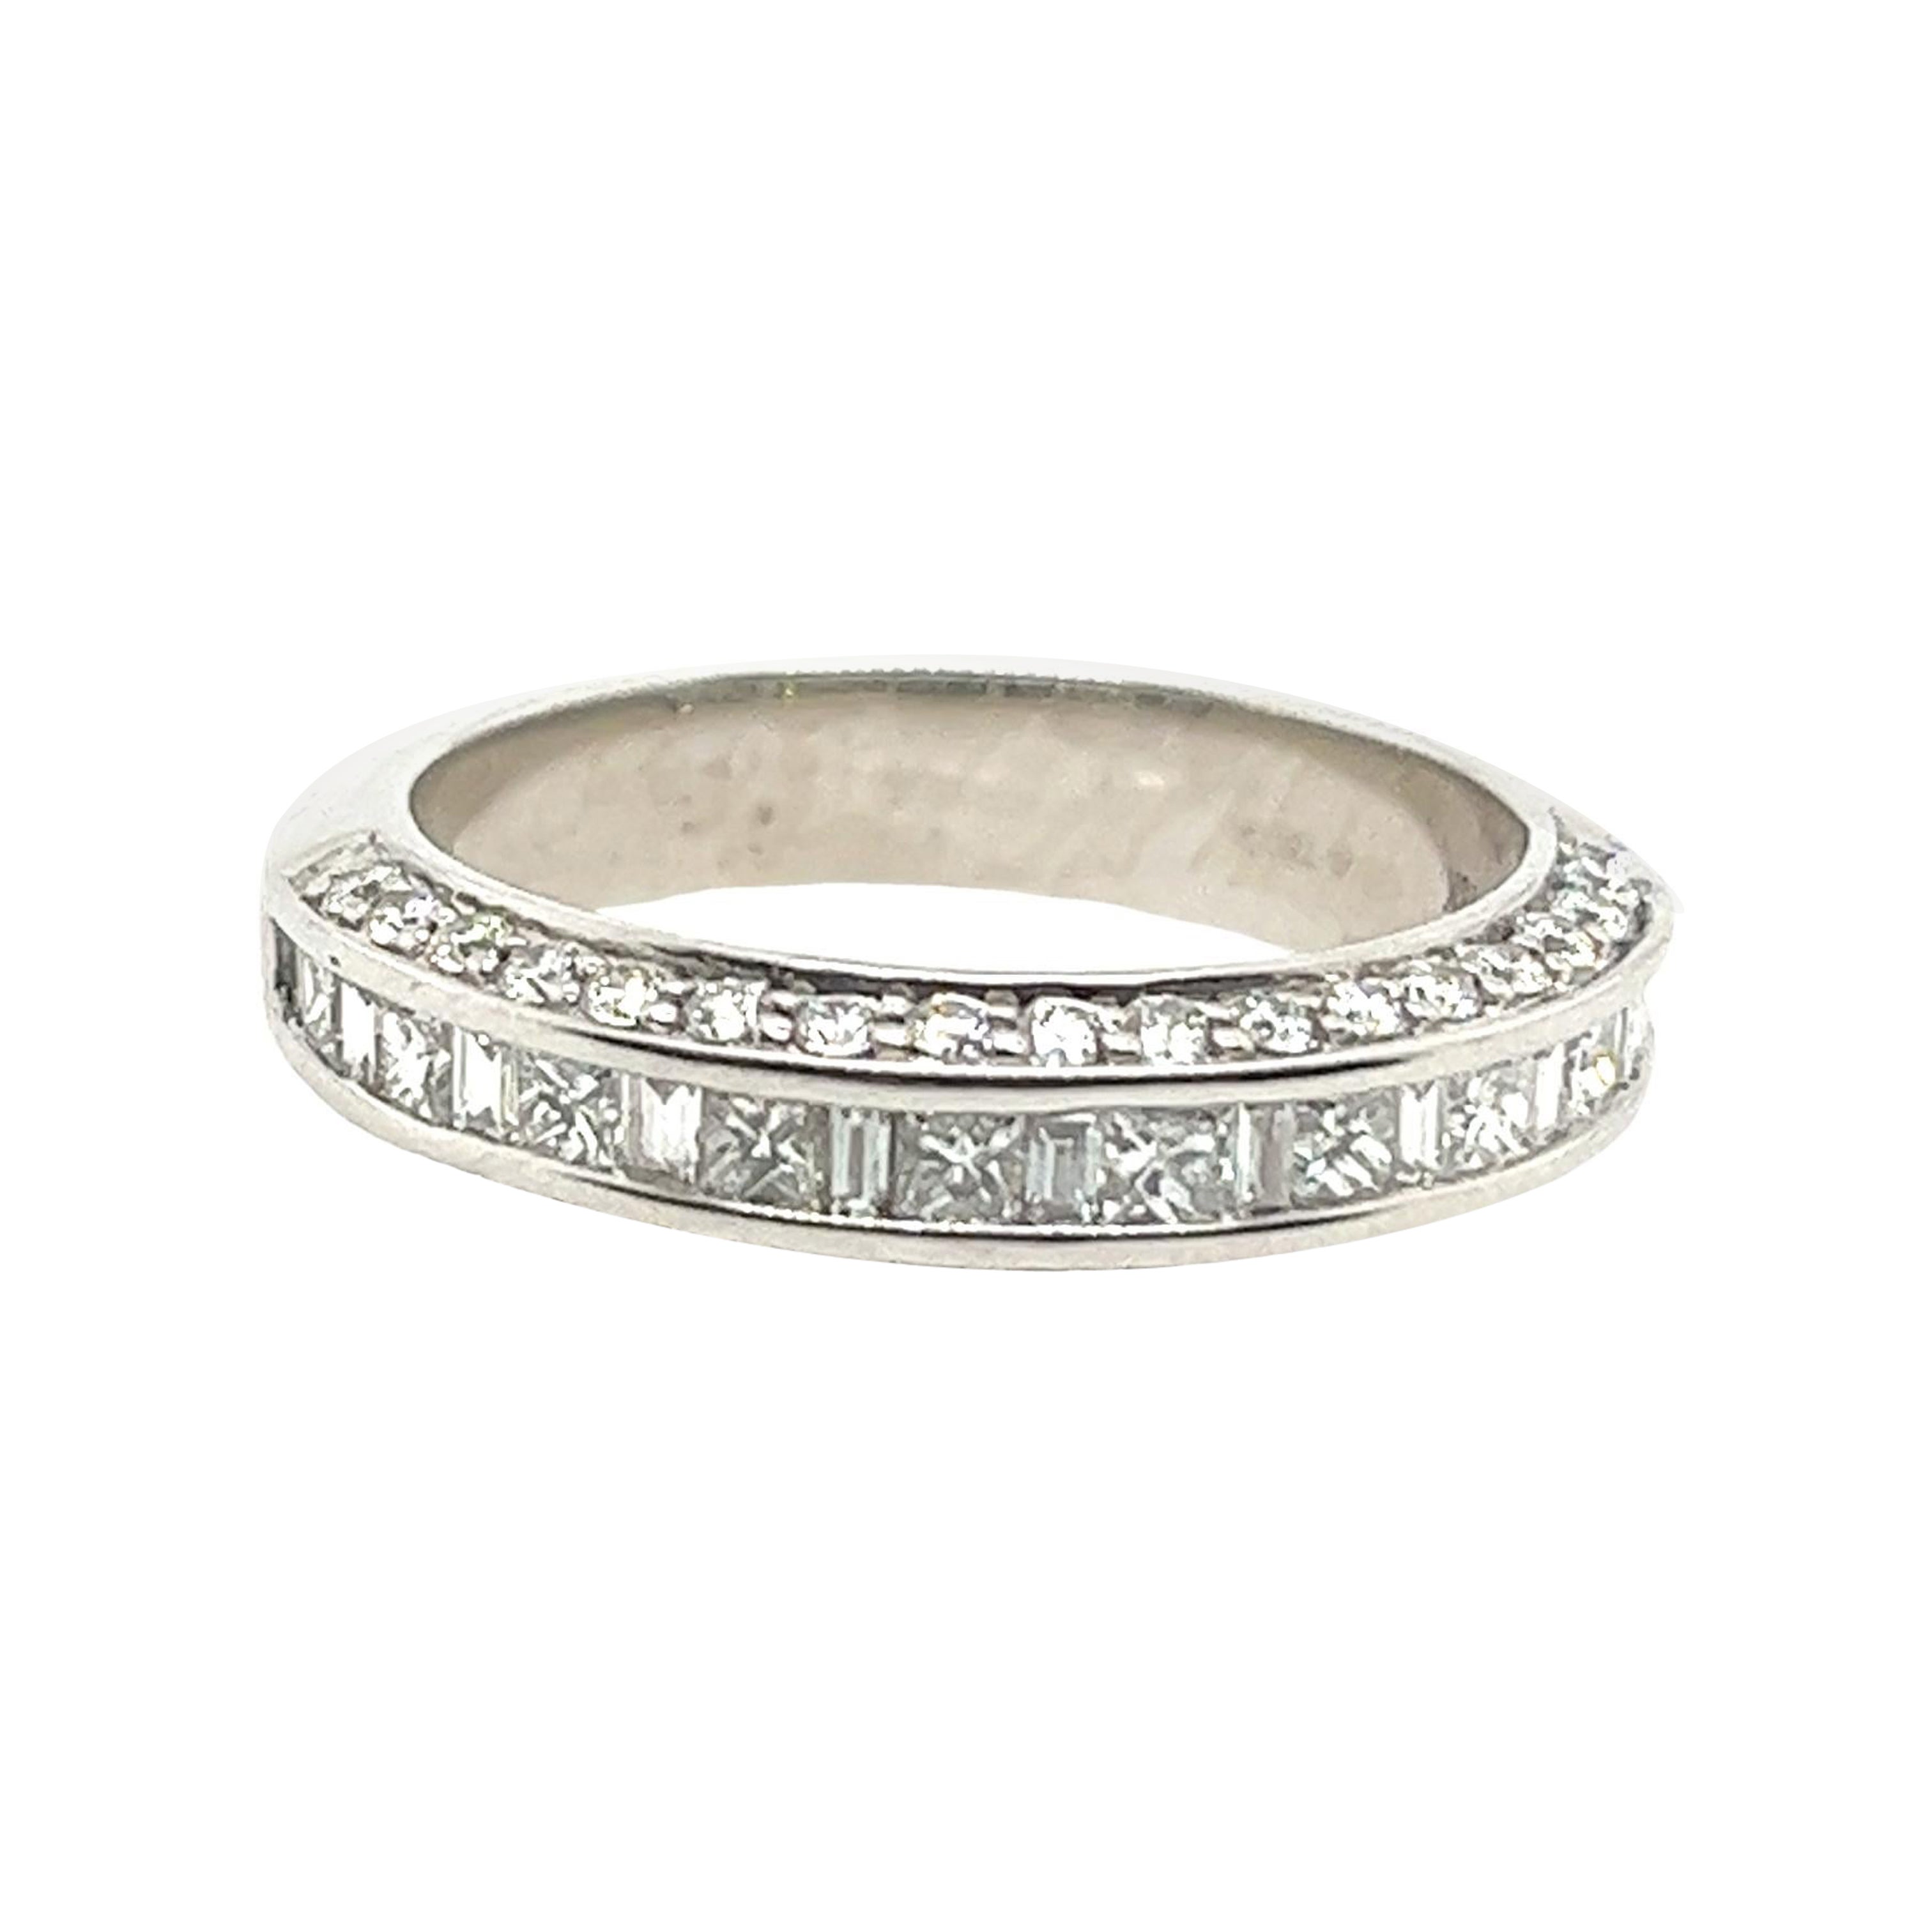 18ct White Gold Diamond Band Ring Set With 0.90ct Natural Diamonds